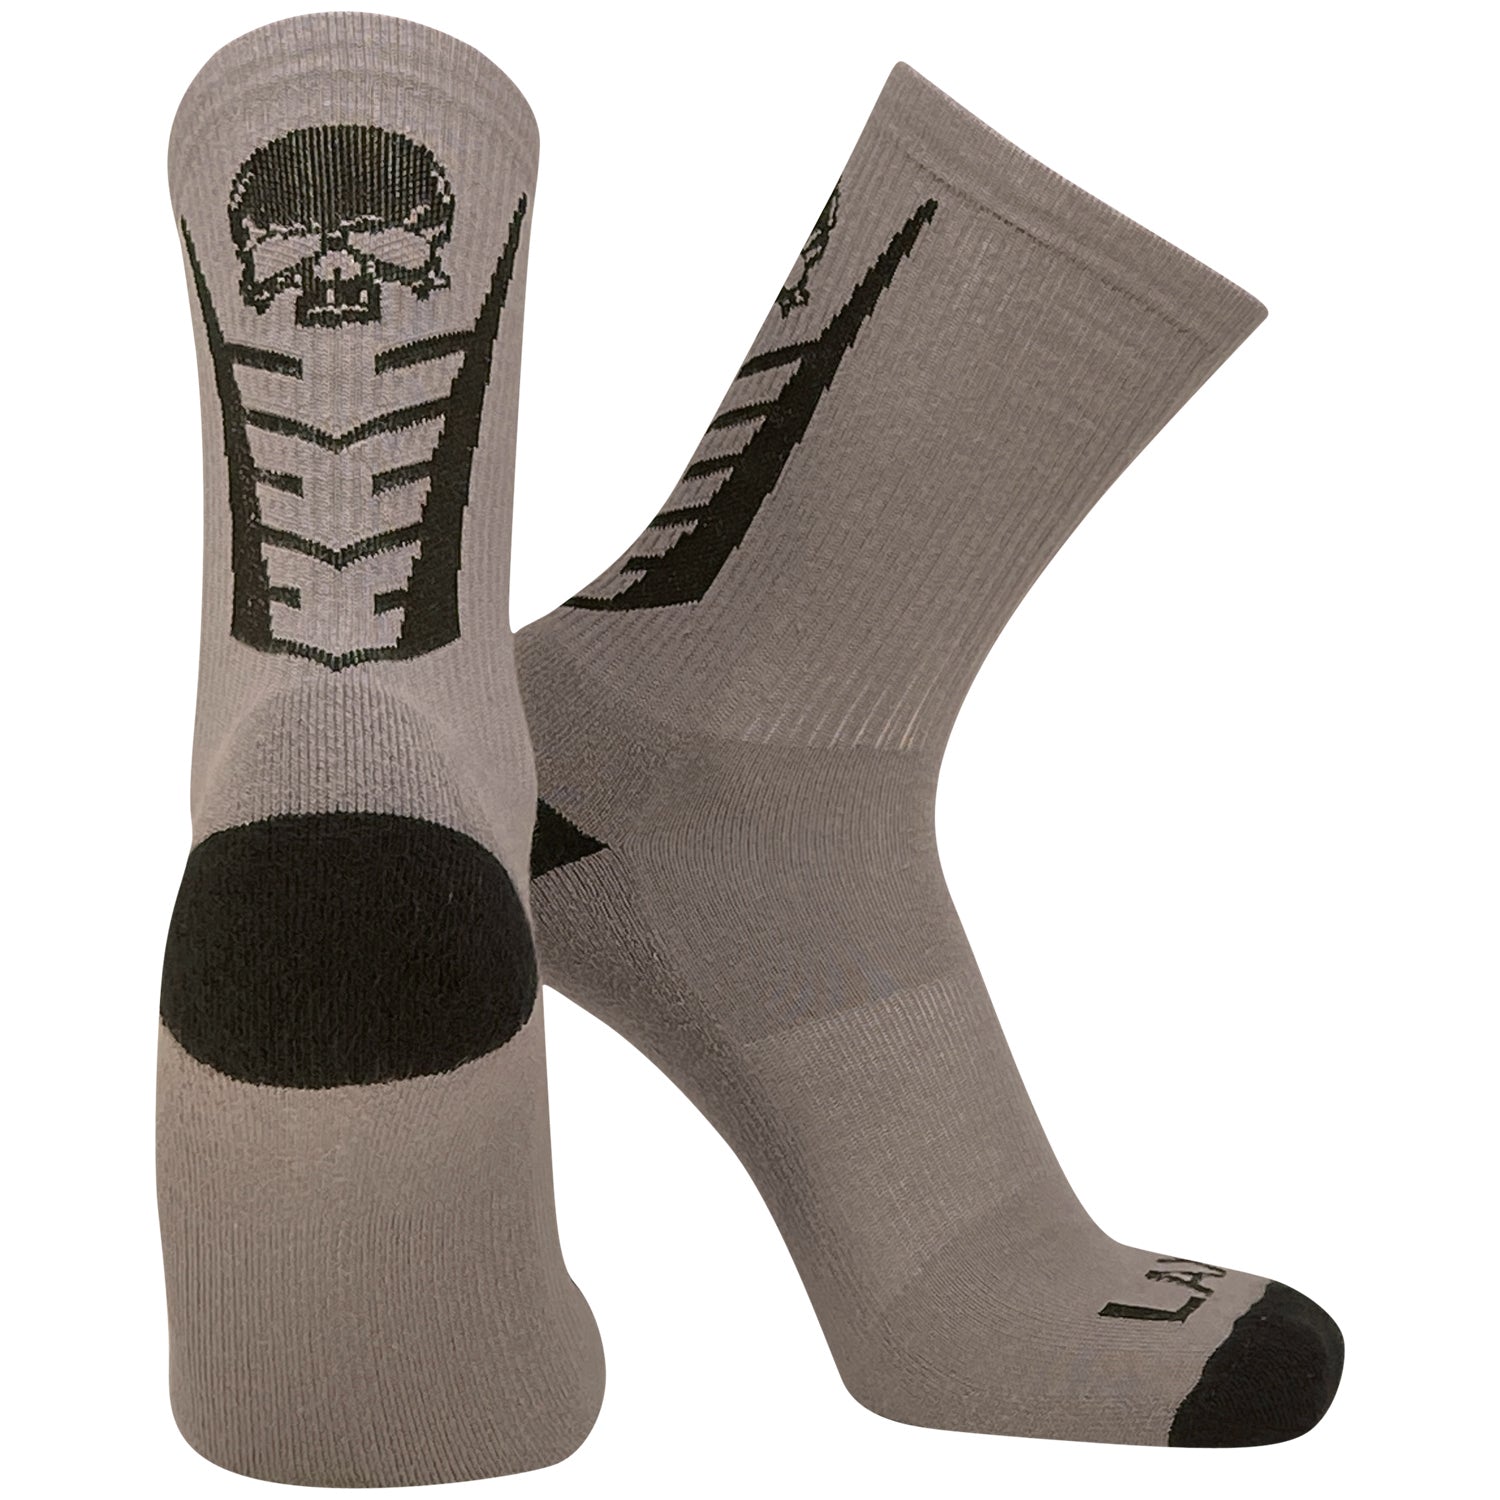 Topsox Lacrosse LAX Crew socks in Dark Grey and Black with Skull